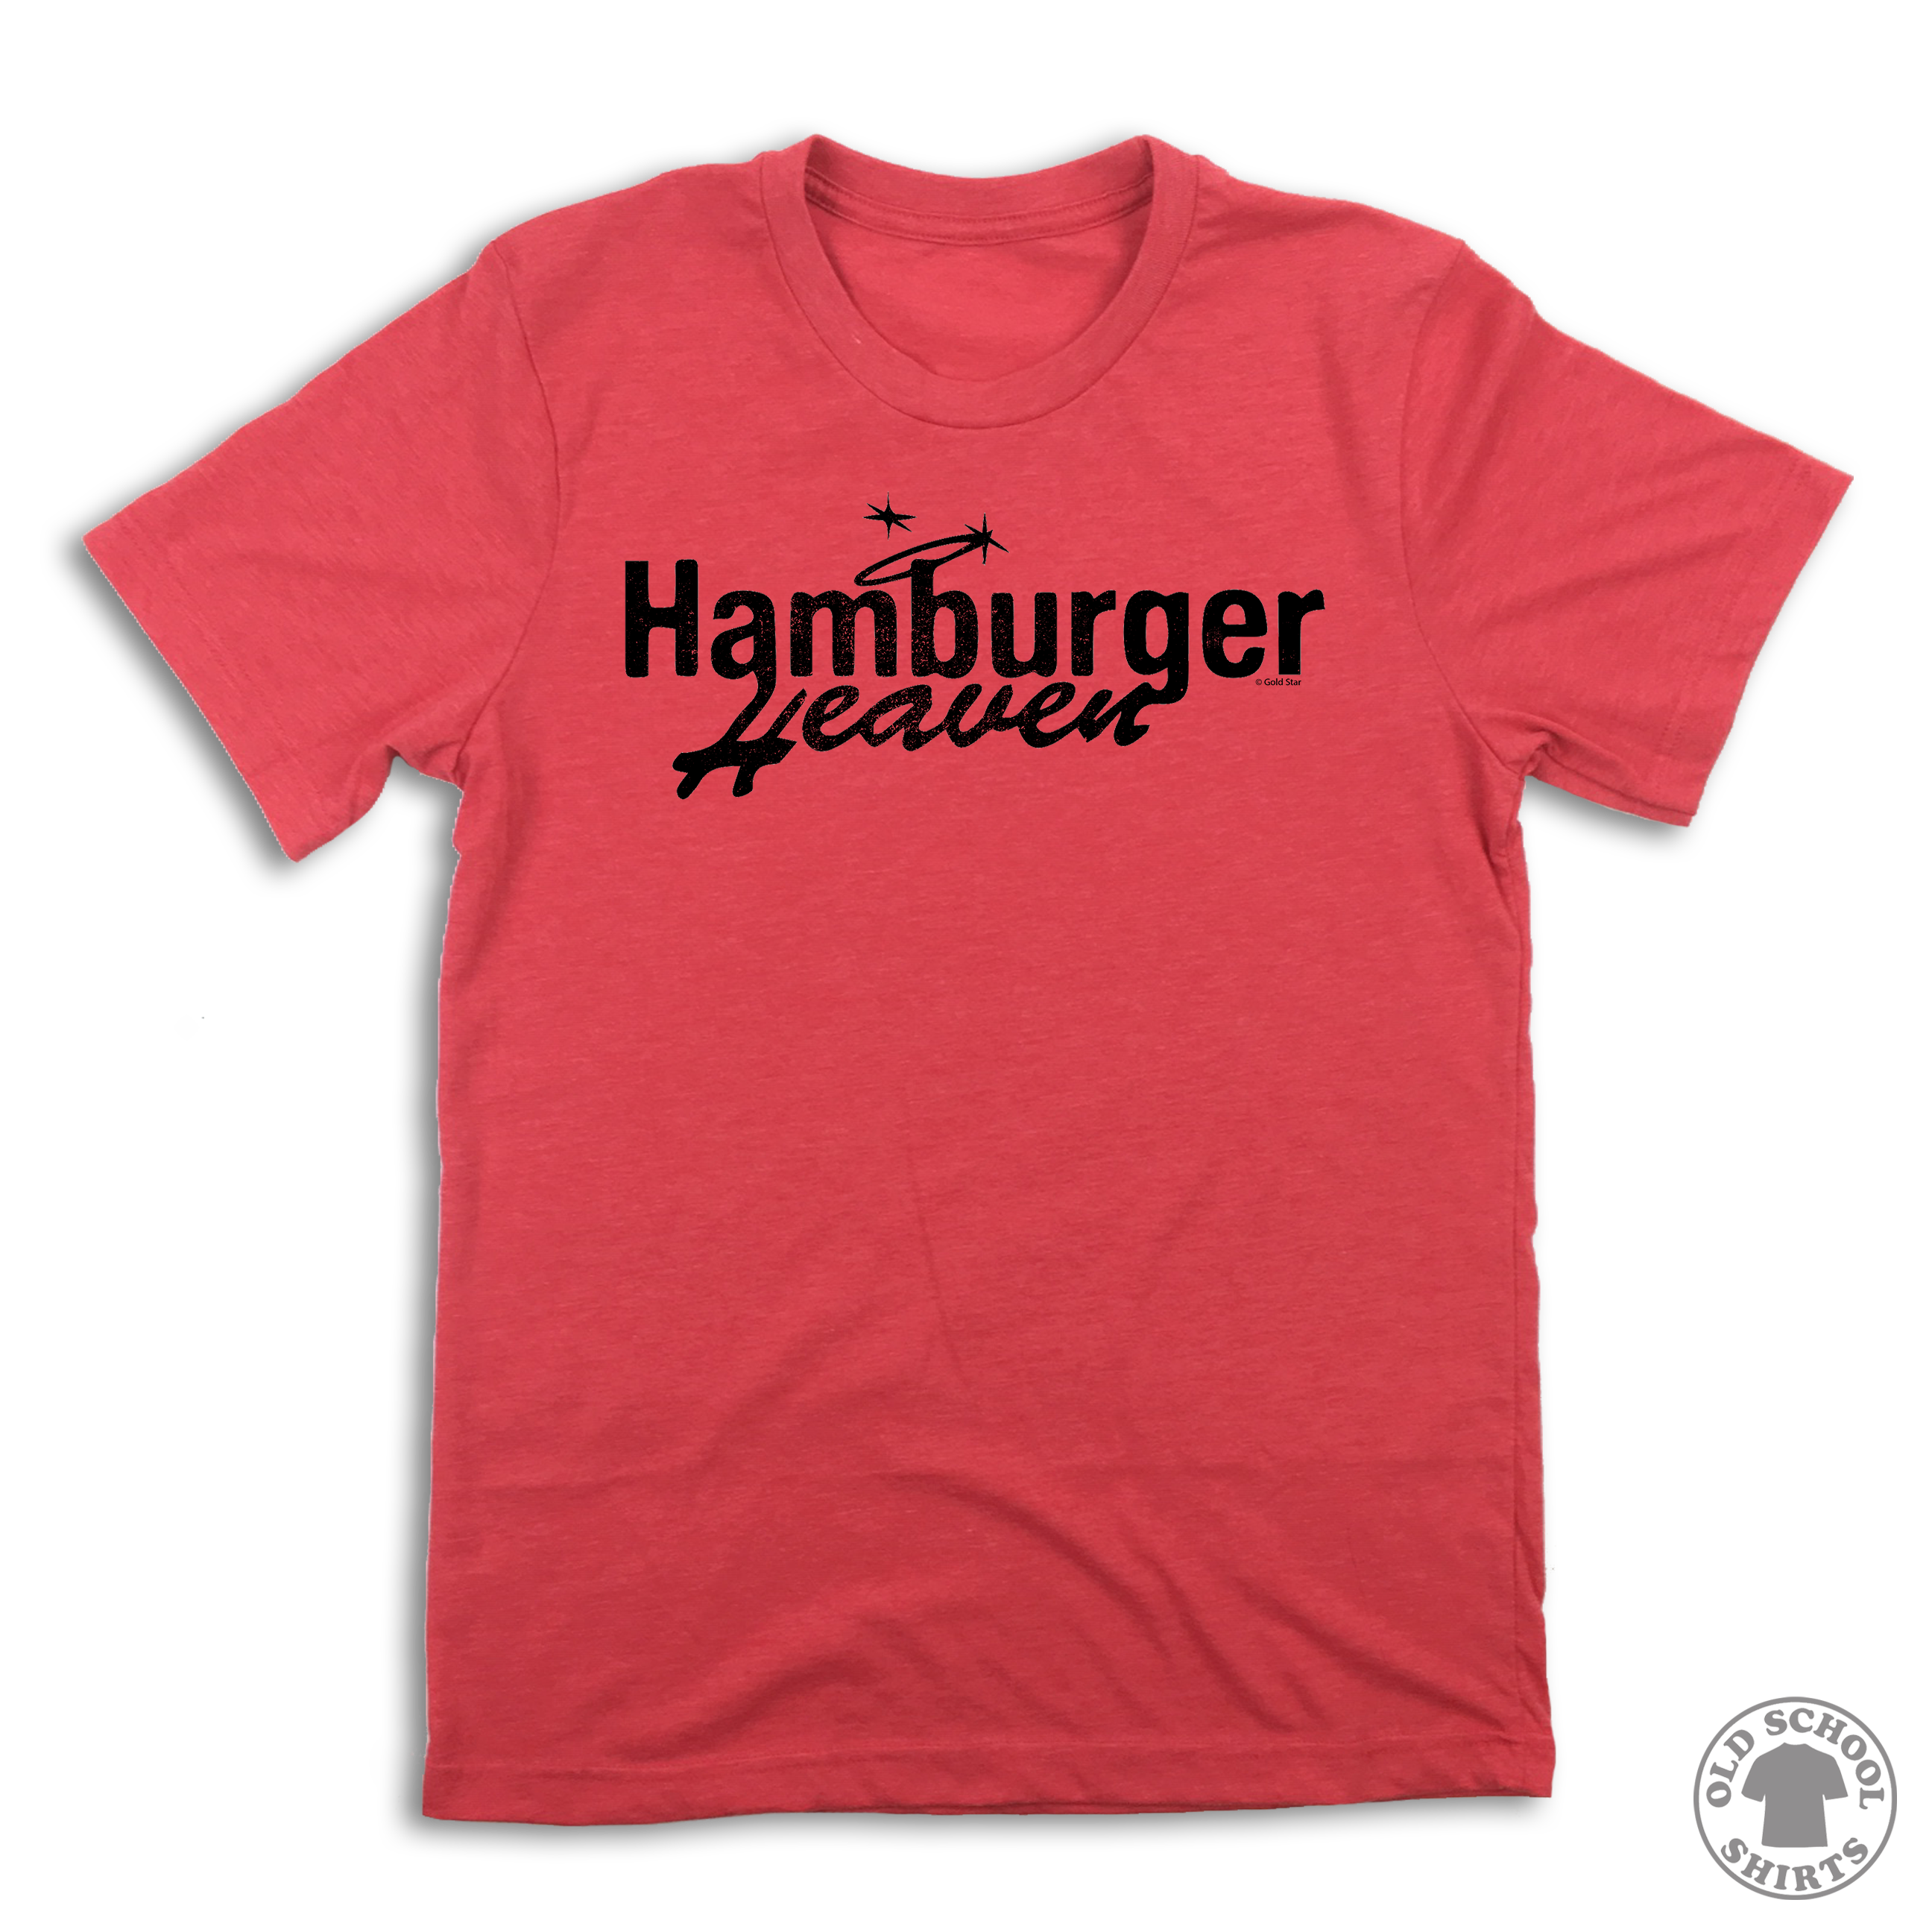 Hamburger Heaven - Old School Shirts- Retro Sports T Shirts